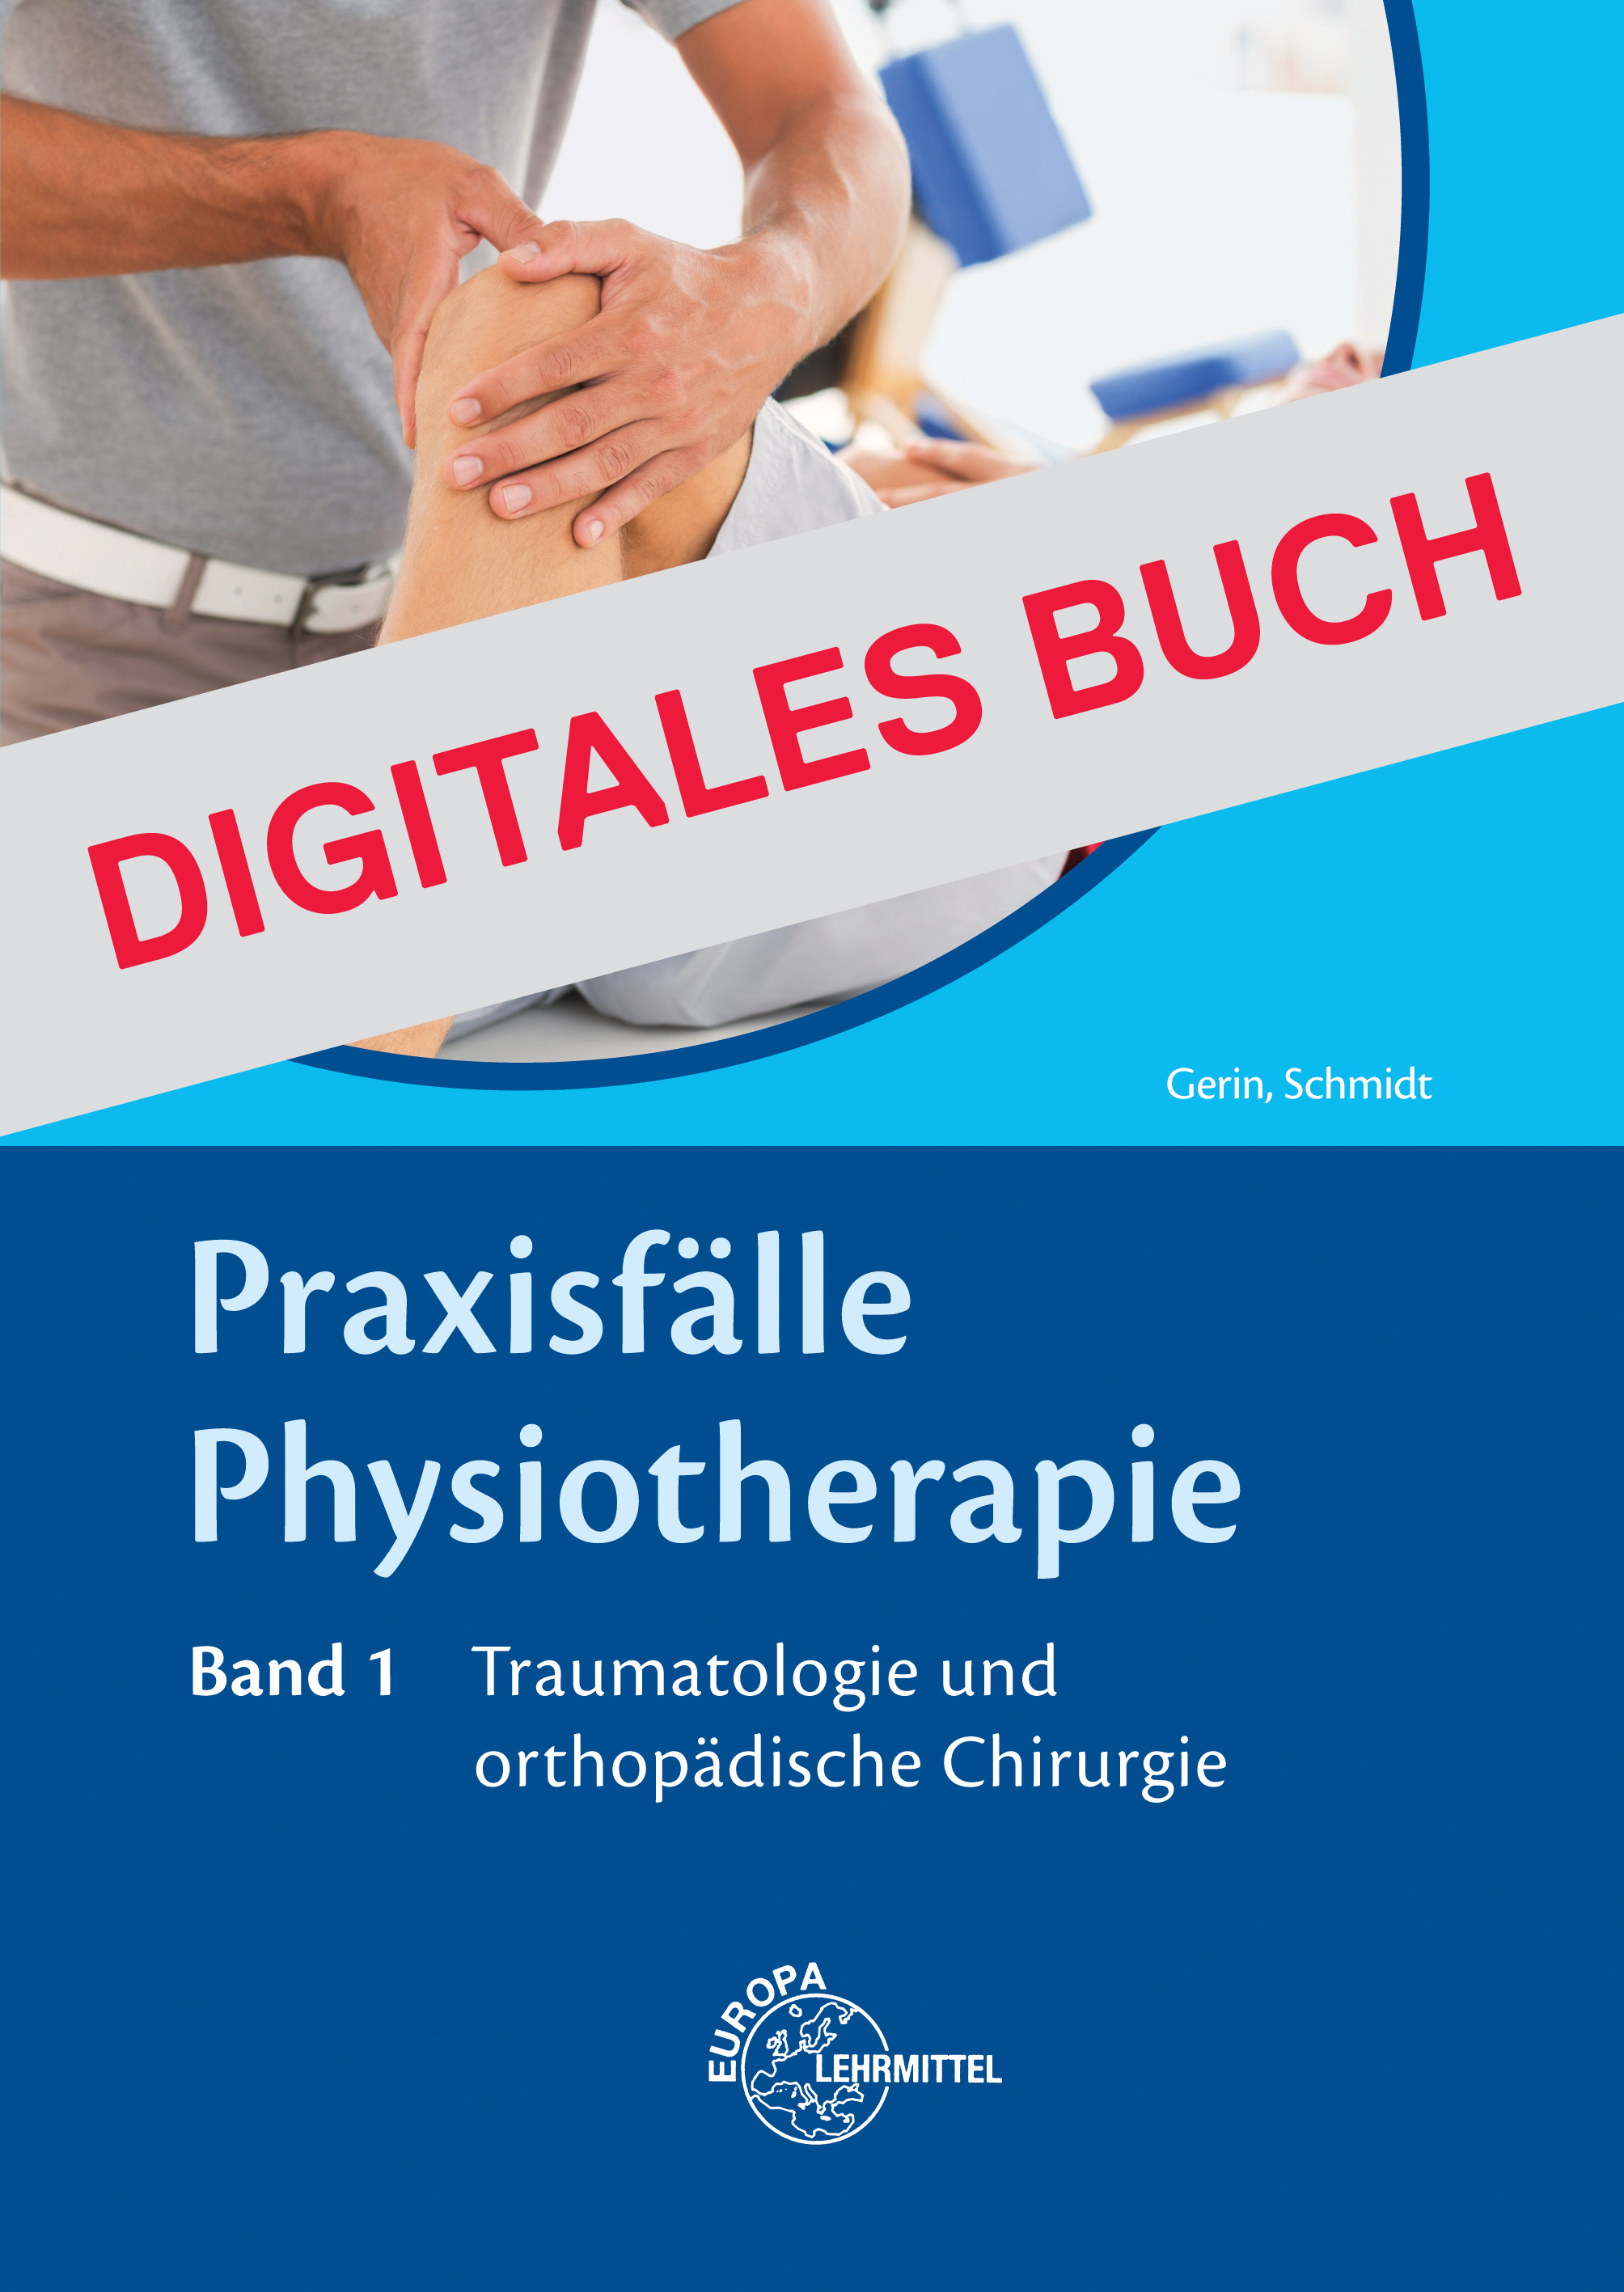 Praxisfälle Physiotherapie, Traumatologie, orthopädische Chirurgie - Digit. Buch